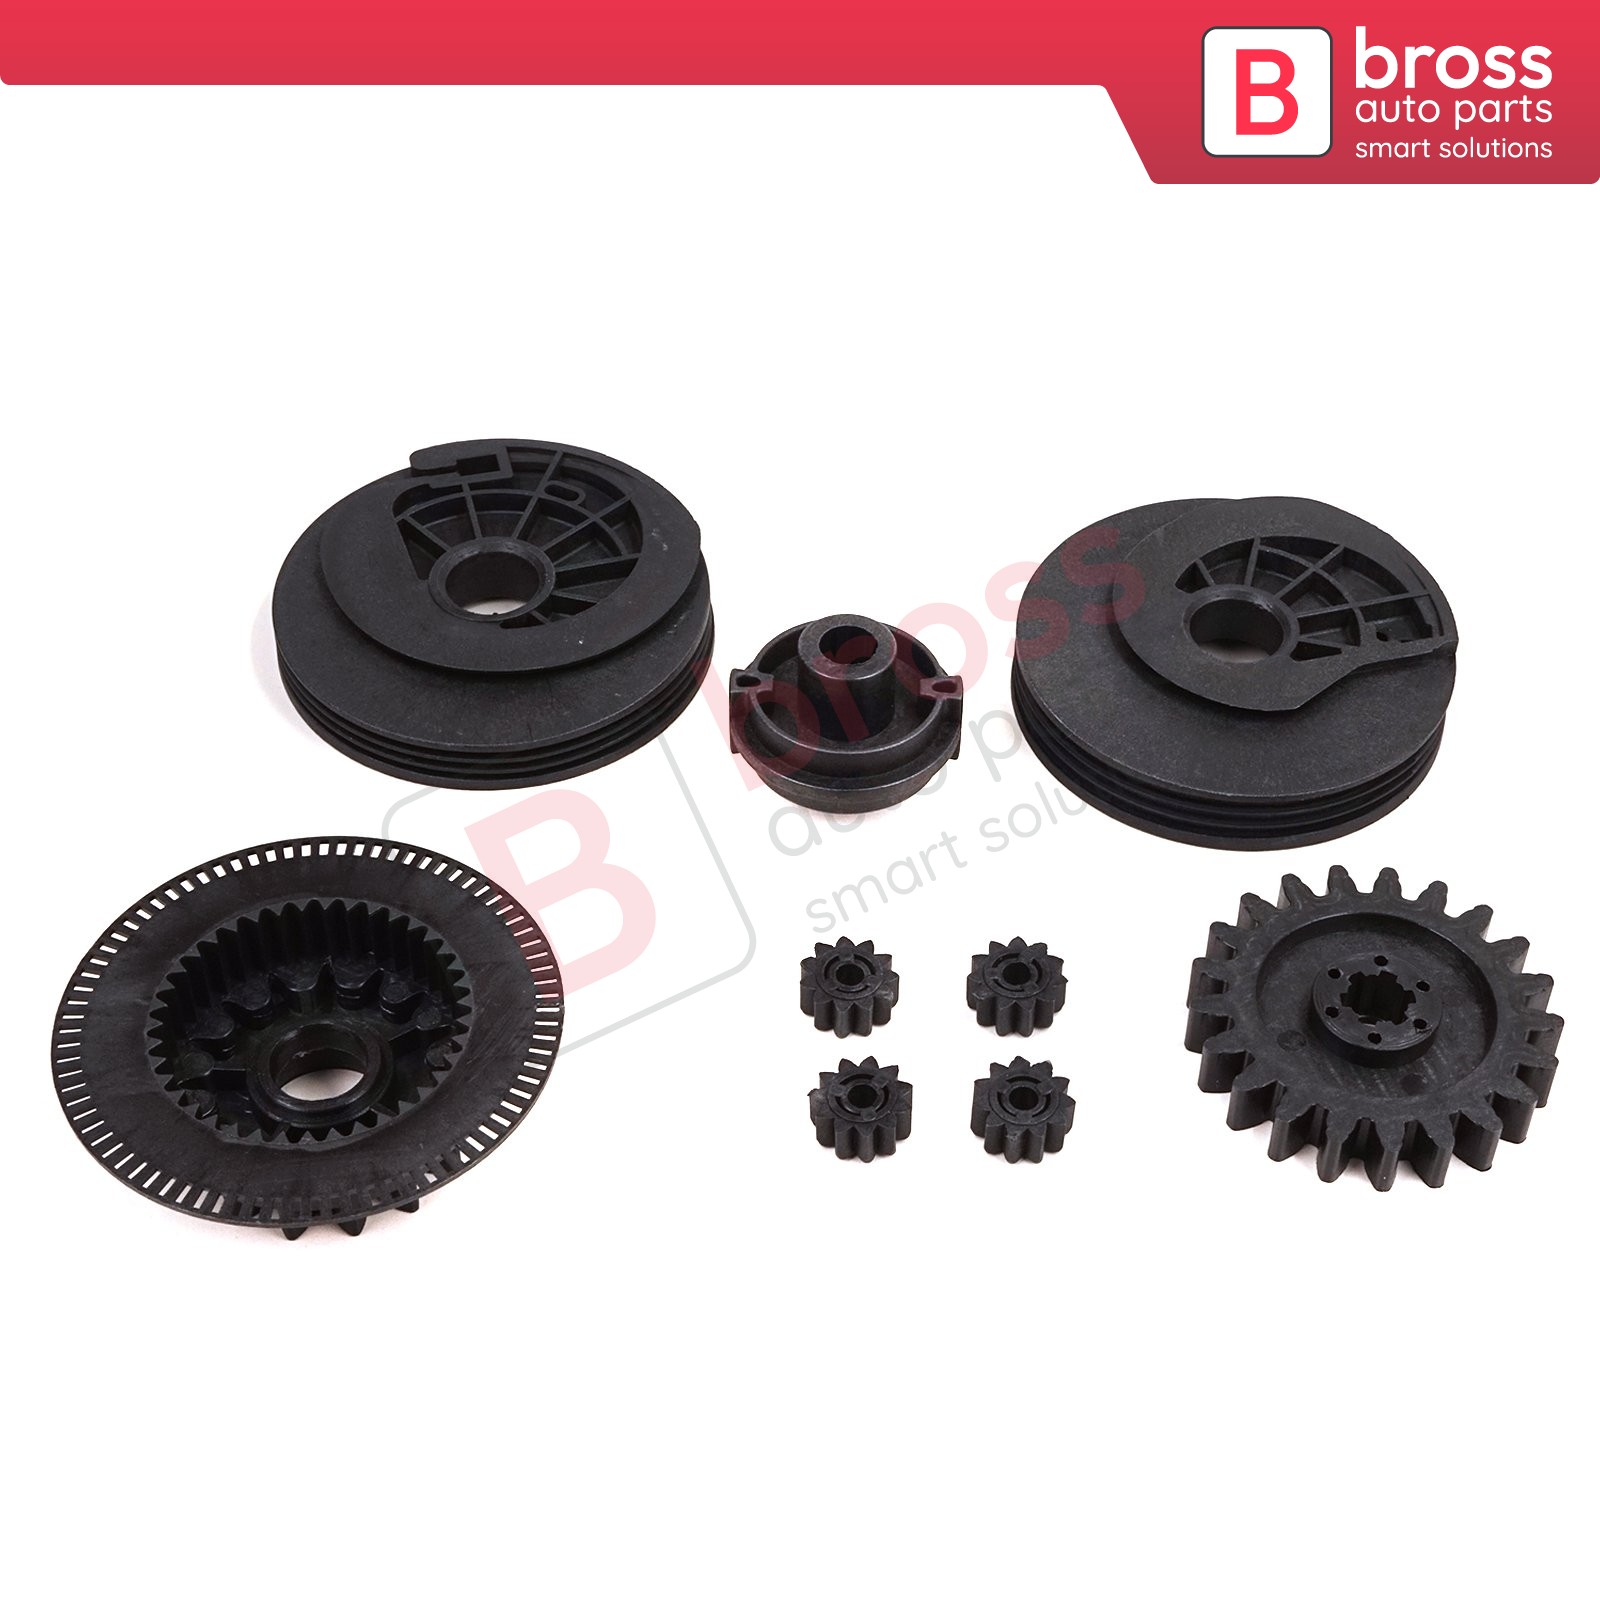 Bross Auto Parts - BDP1100-1 Electric Sliding Door Drive System